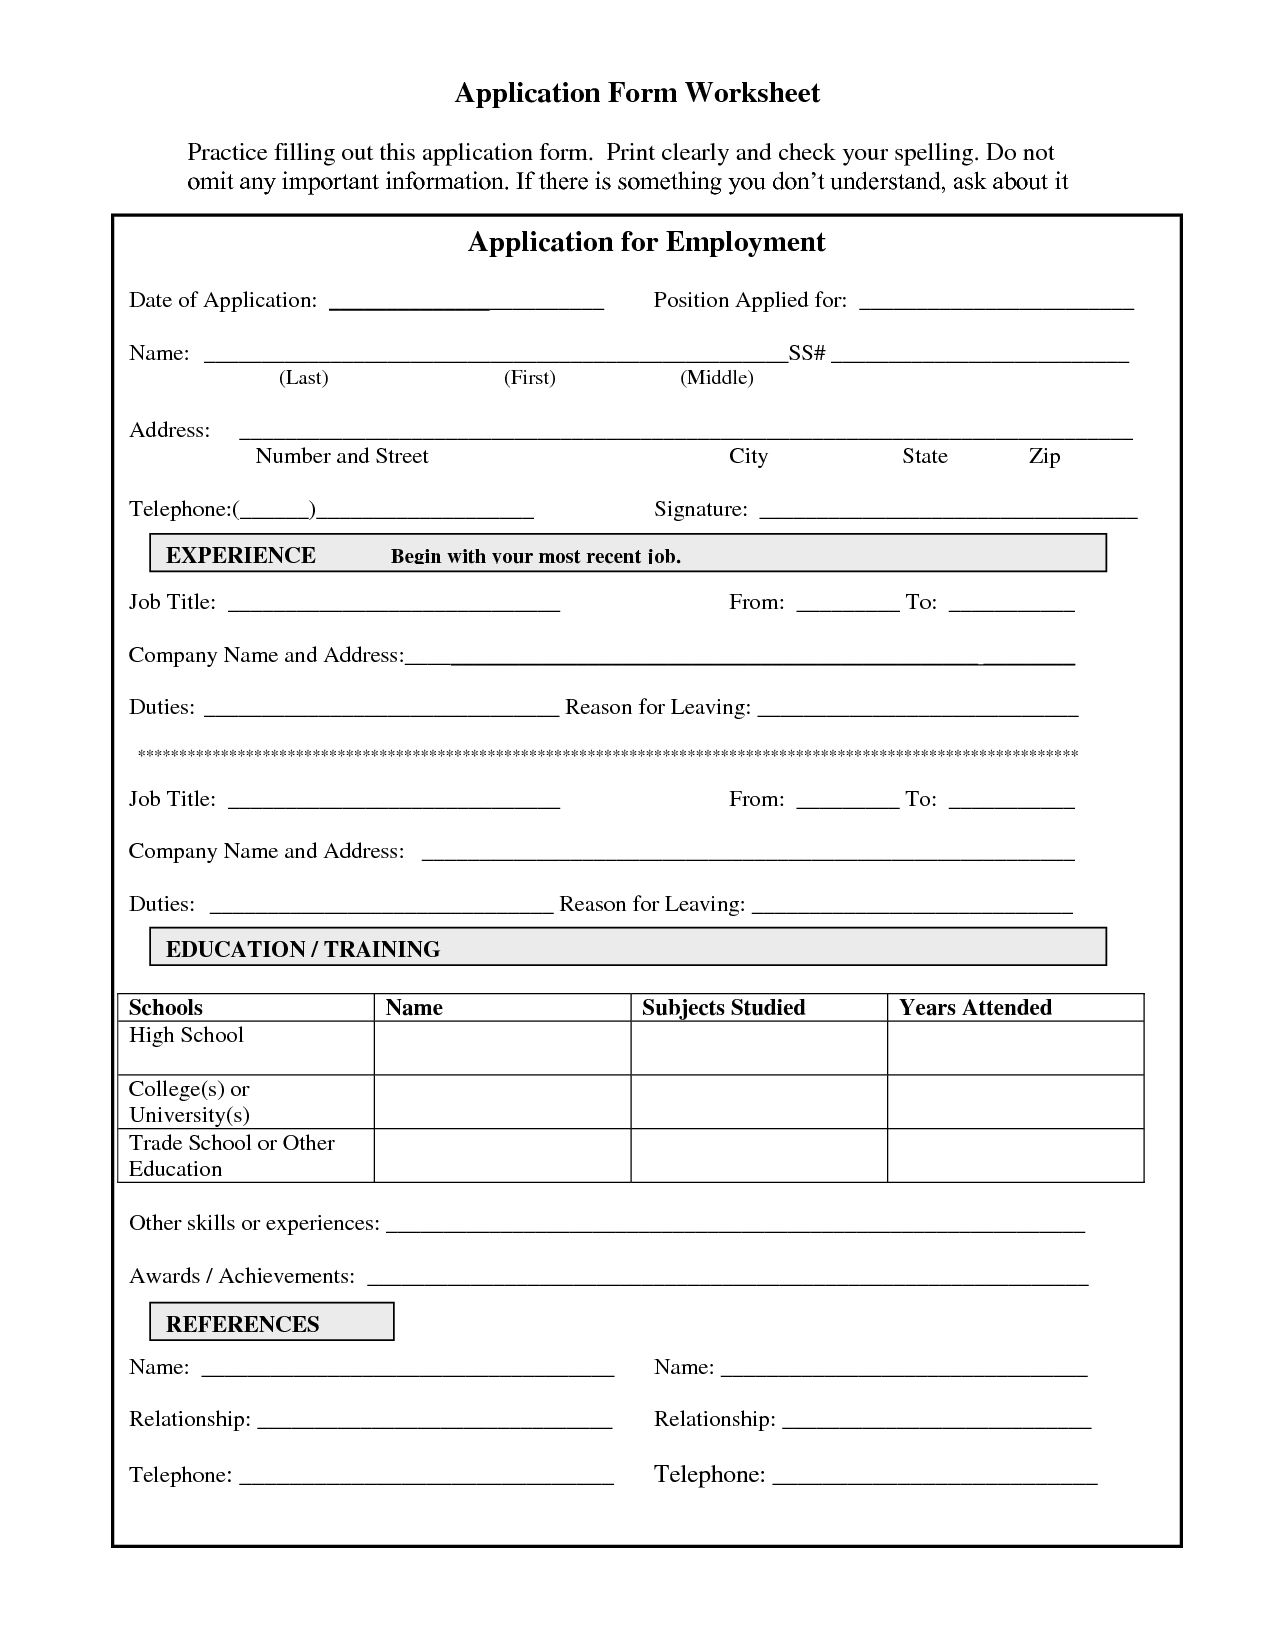 Practice Job Application Form Job Application Sample Writing An